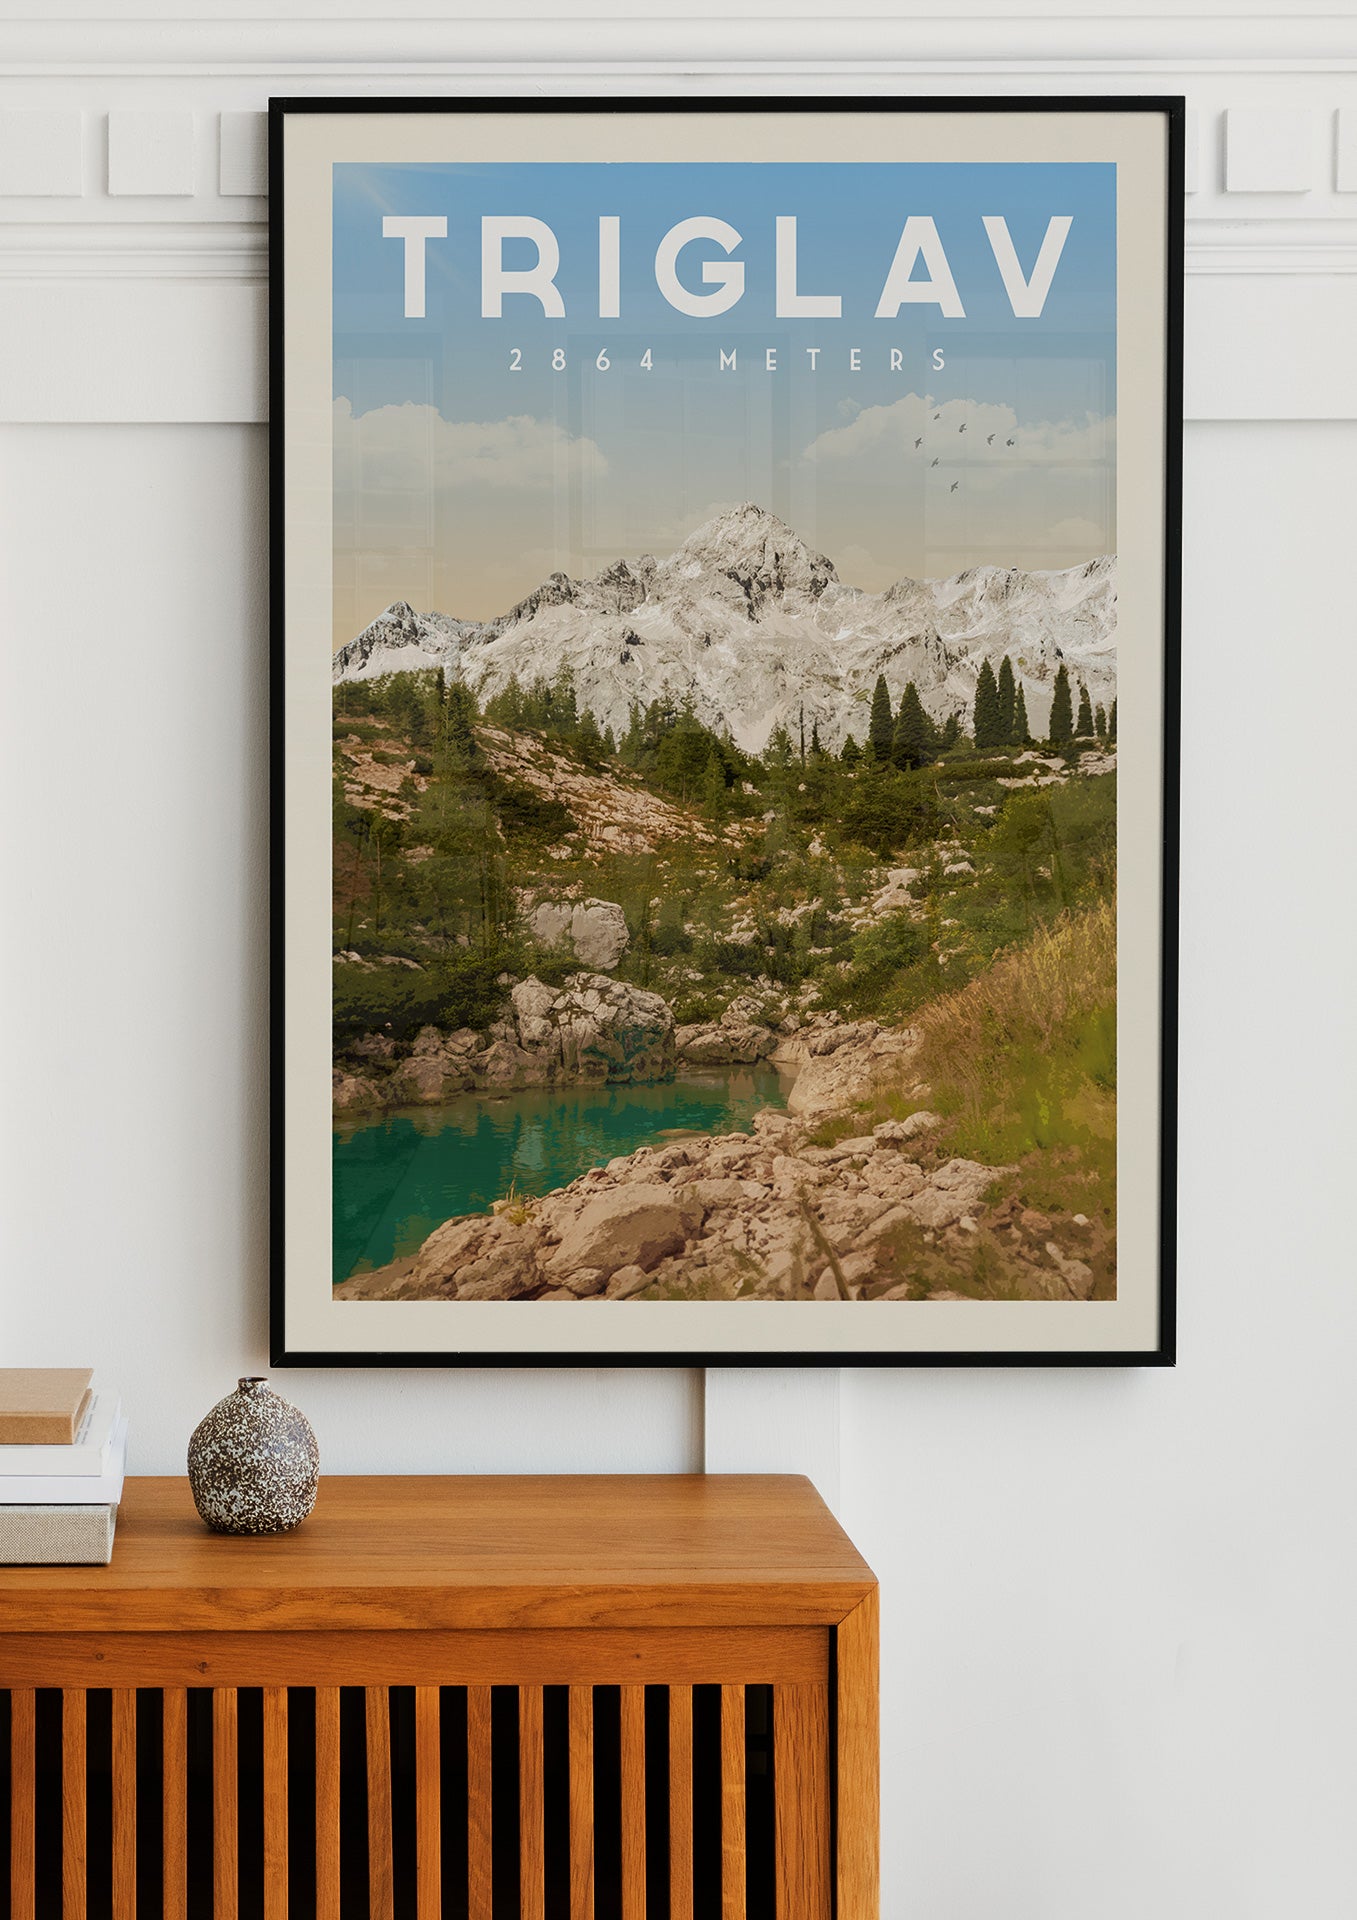 Mount Triglav, Slovenia - Vintage Travel Poster